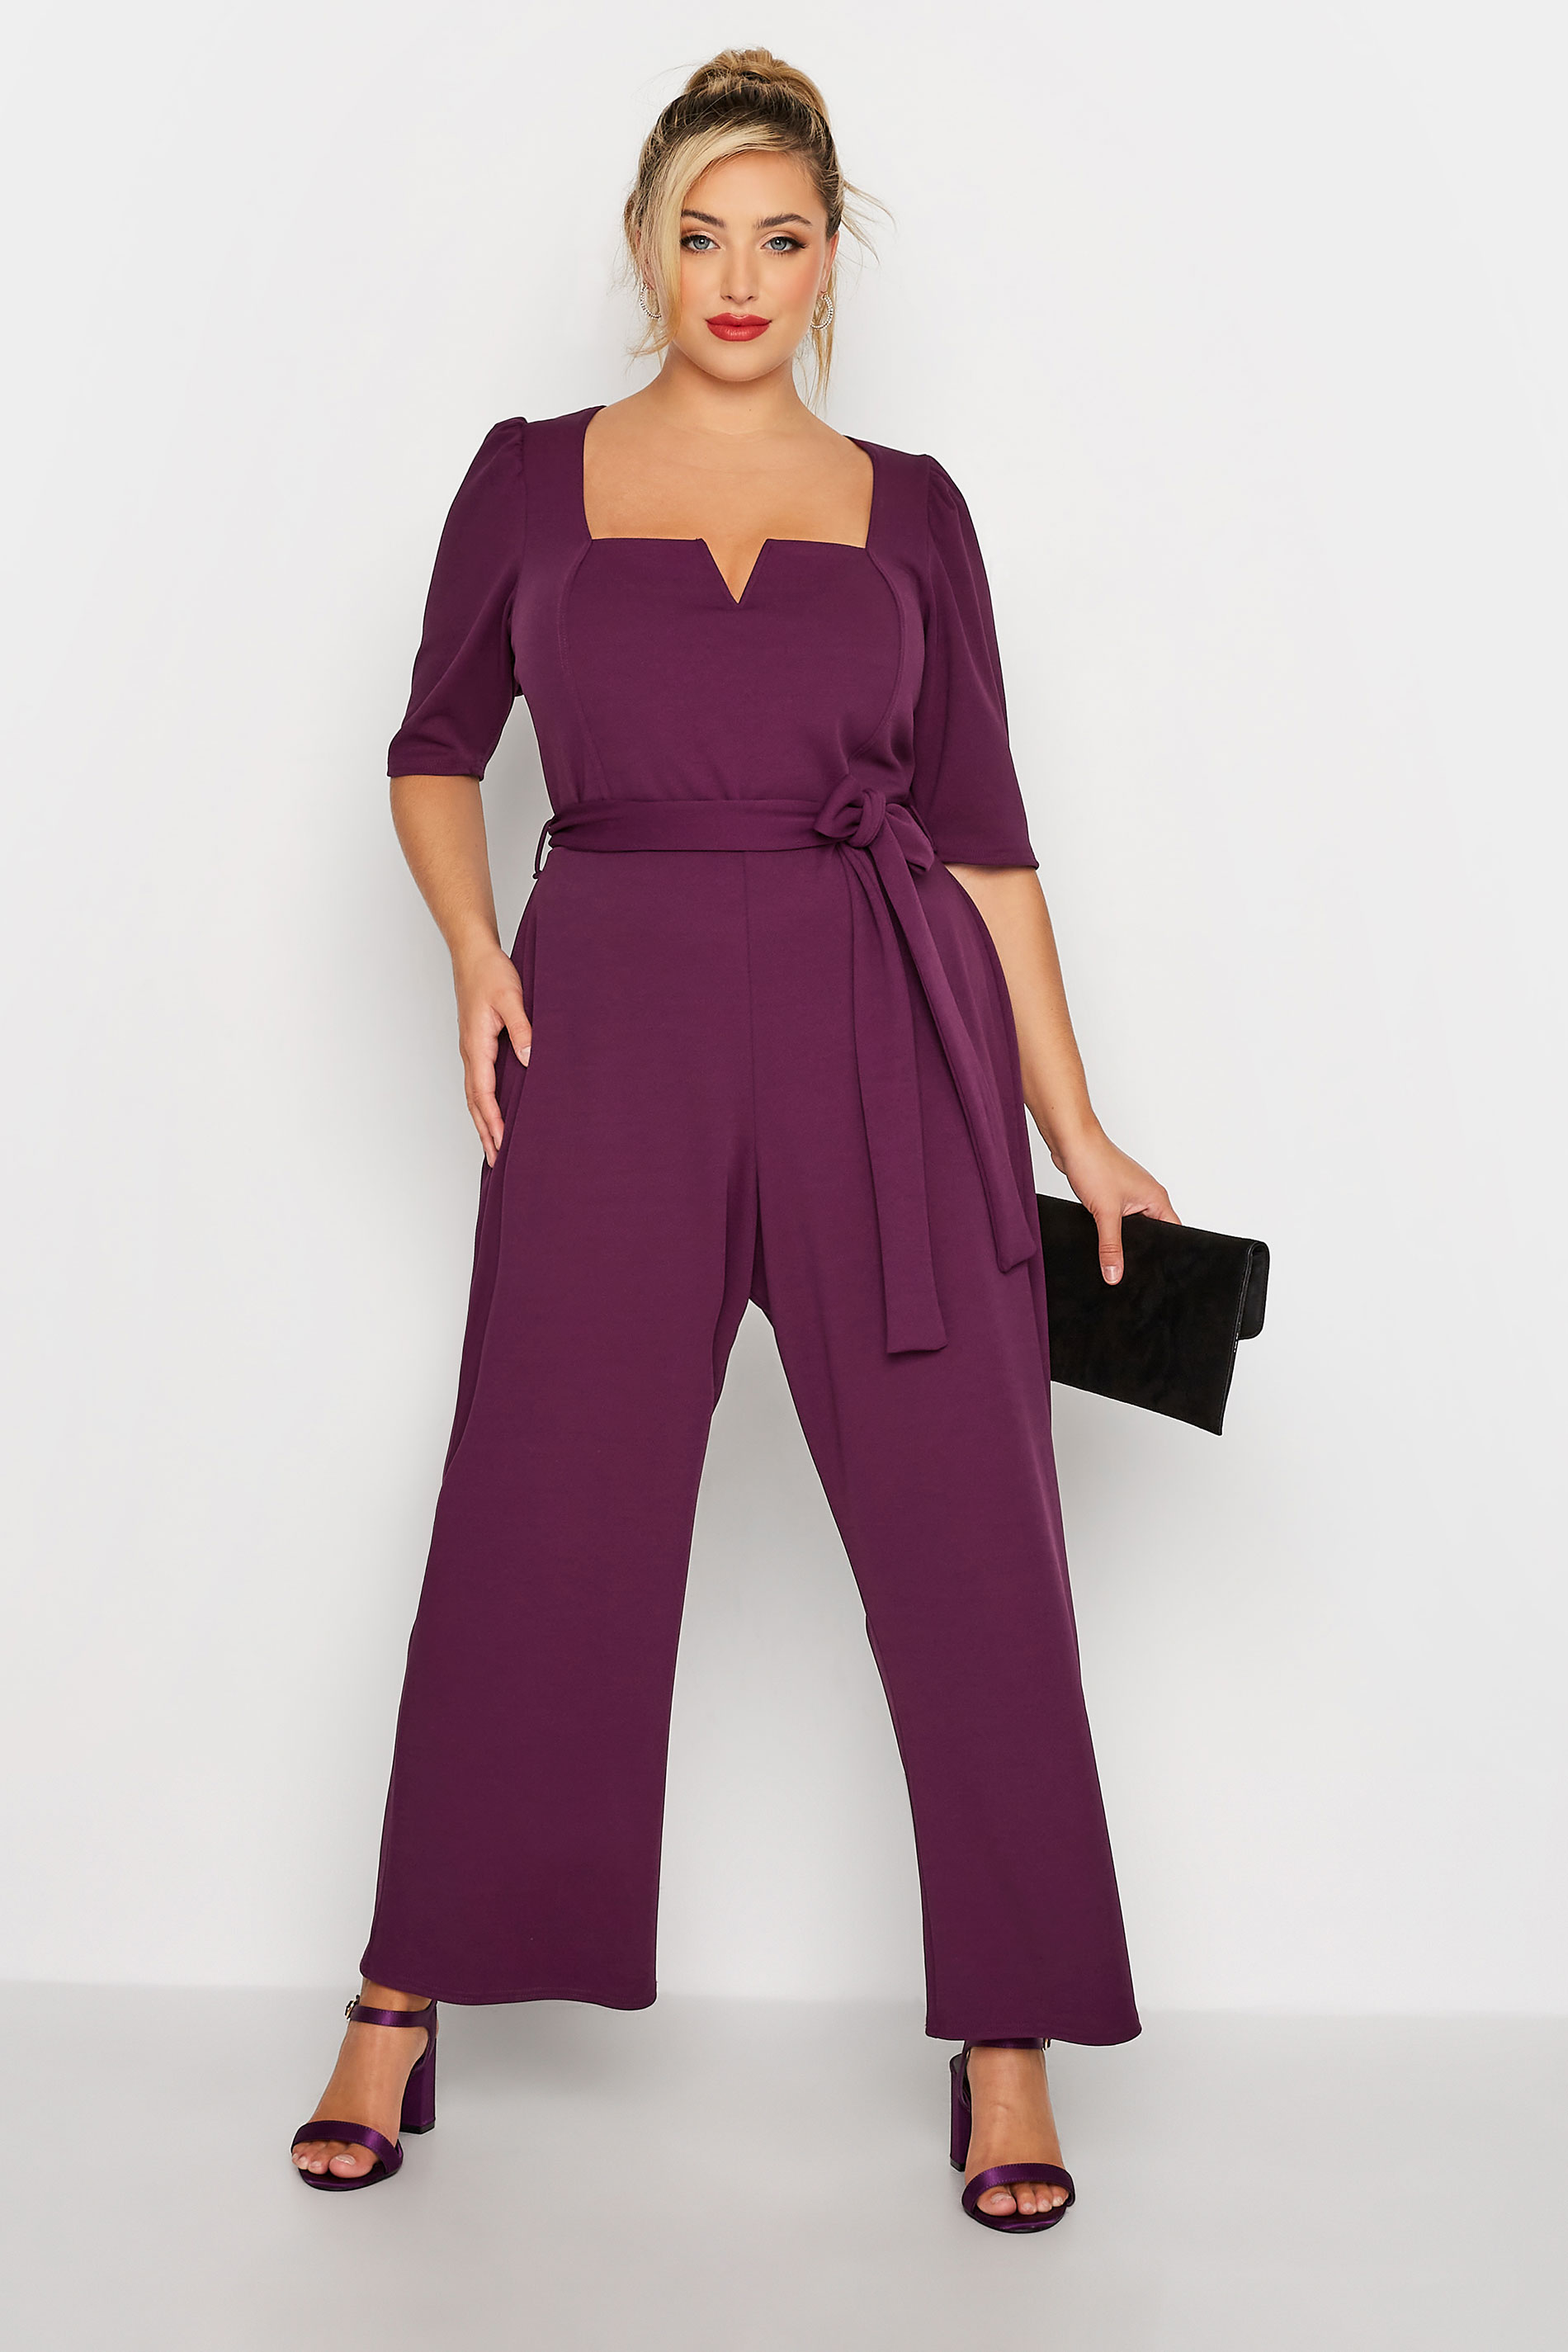 YOURS LONDON Plus Size Purple Notch Neck Tie Waist Stretch Jumpsuit | Yours Clothing 1